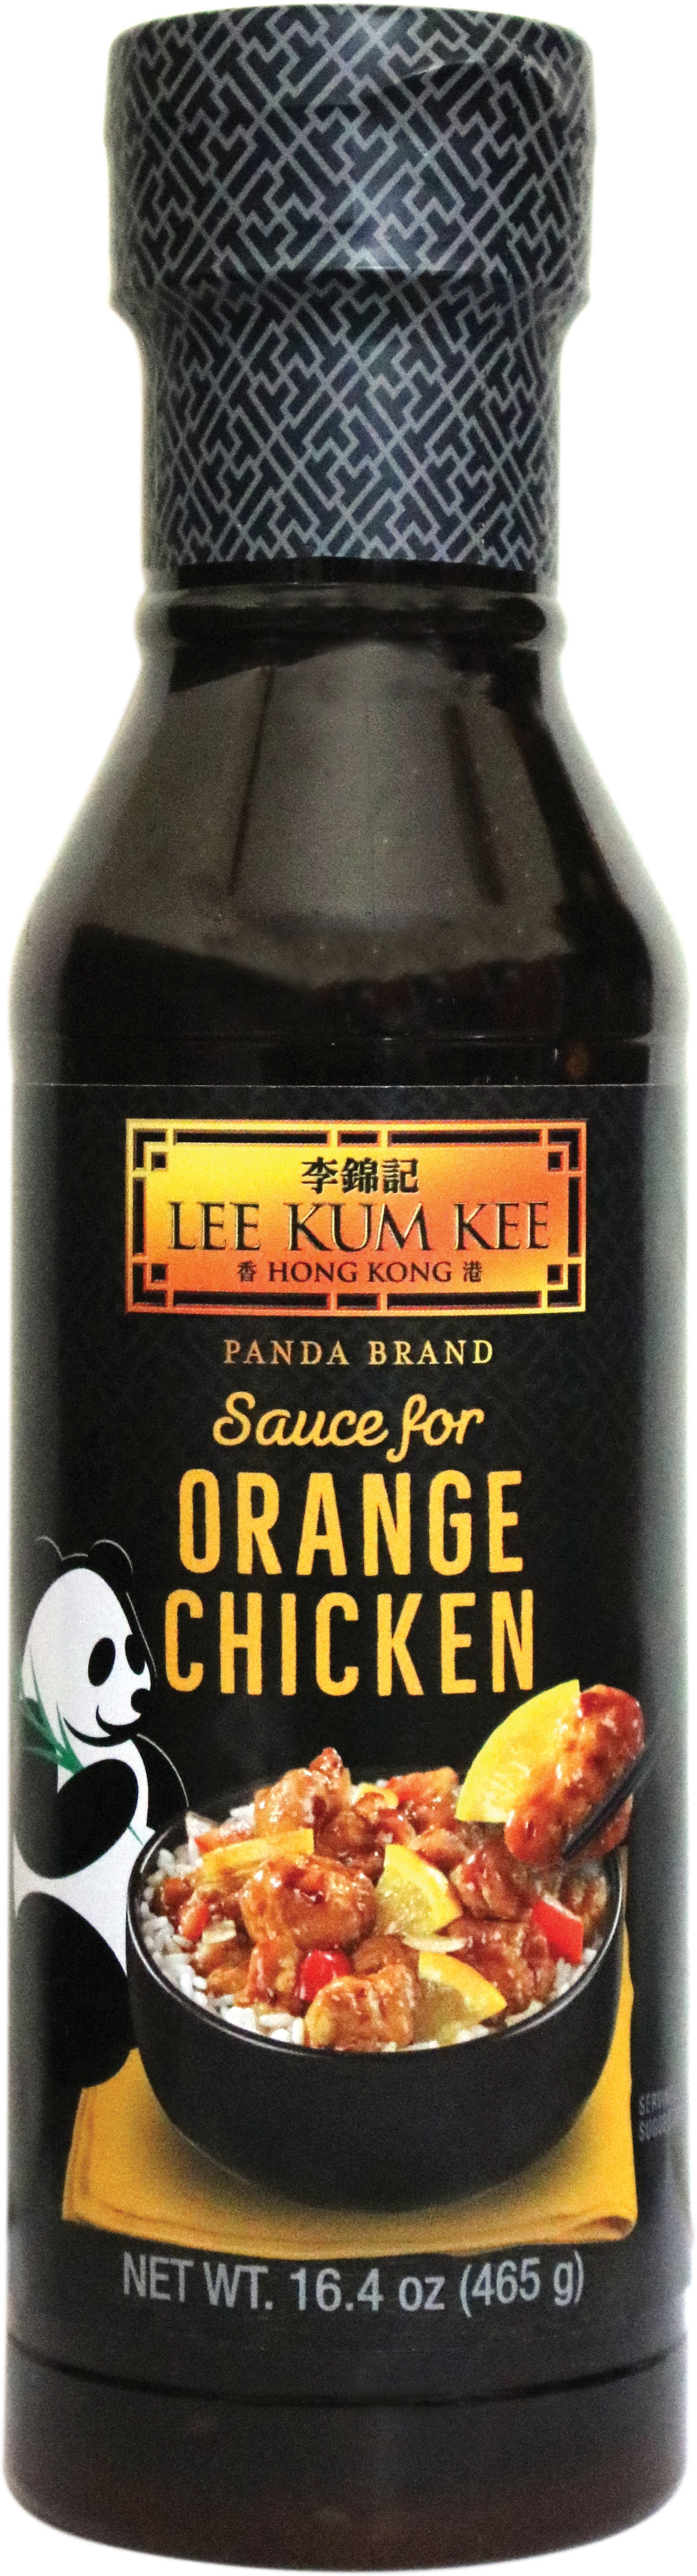 Panda Brand Sauce for Orange Chicken - 16.4 oz, Bottle